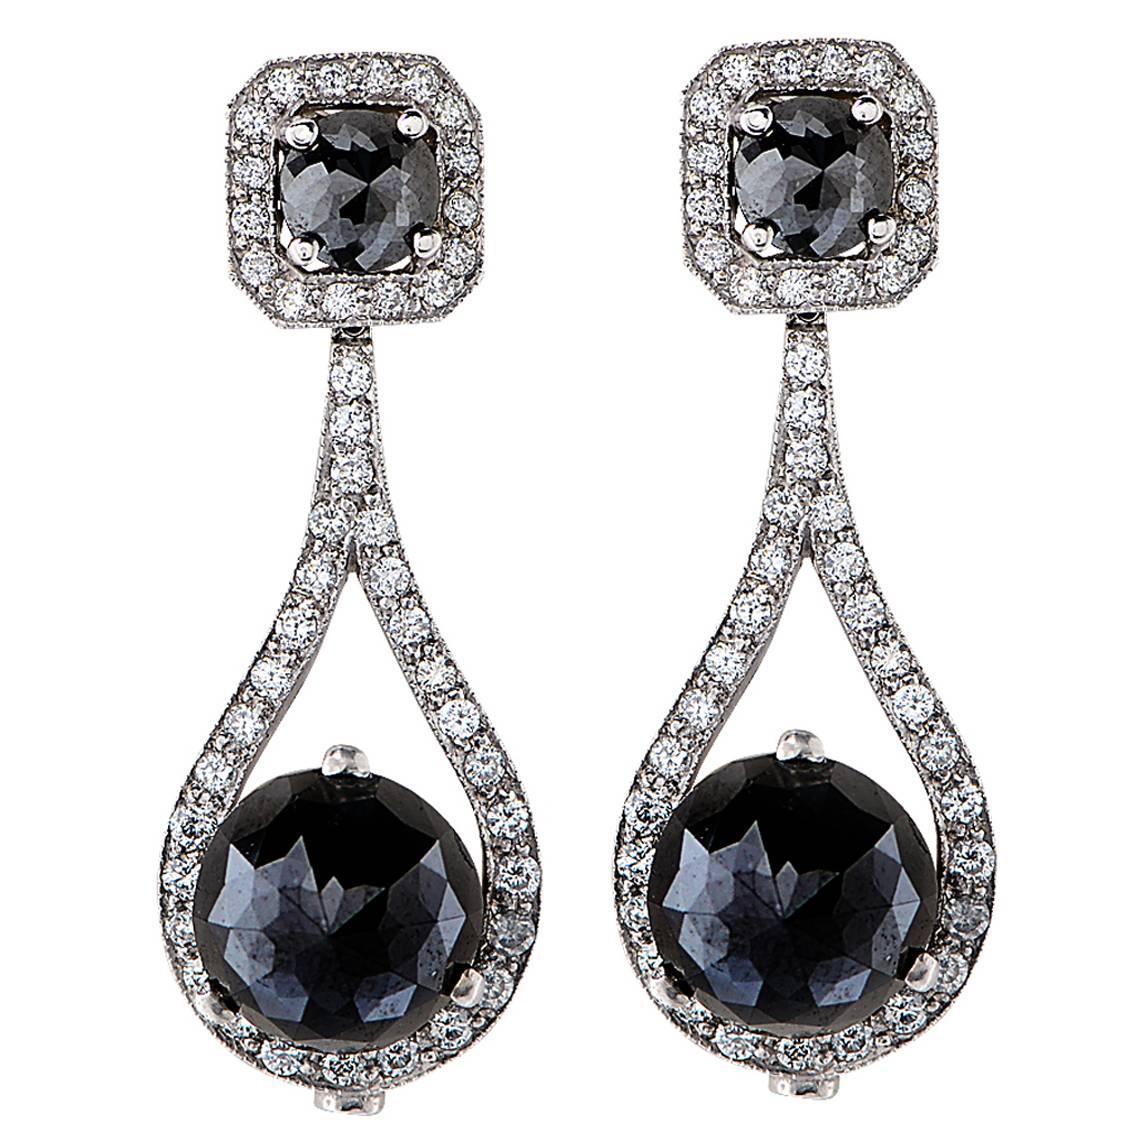 26.74 Carat Black Diamond Earrings